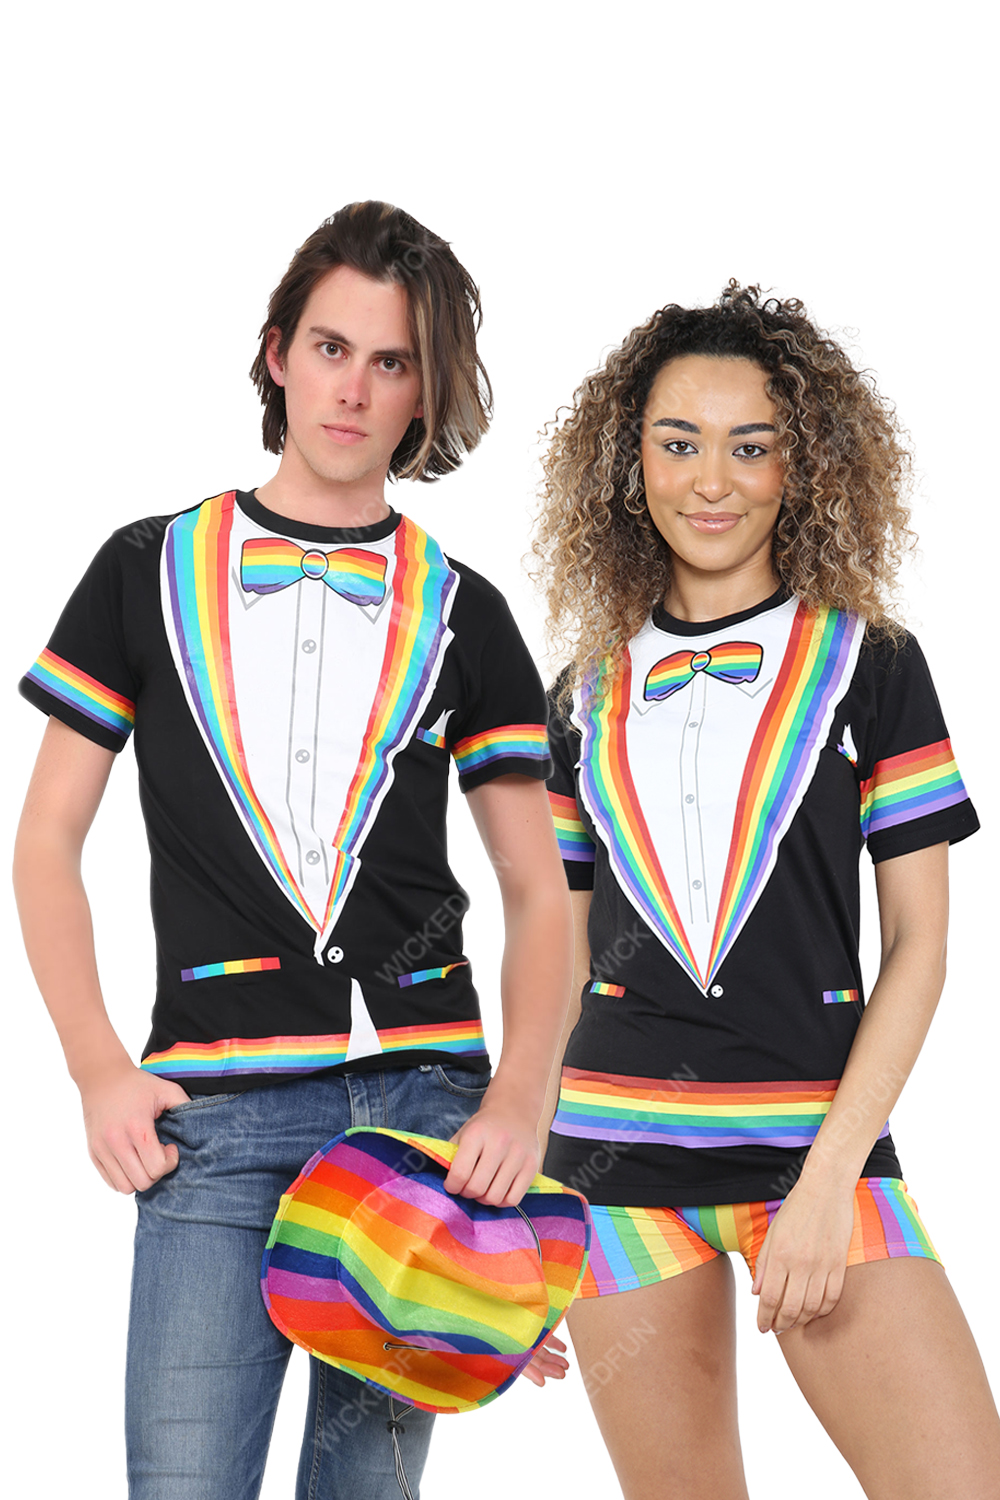 Wickedfun Rainbow Printed T-Shirt